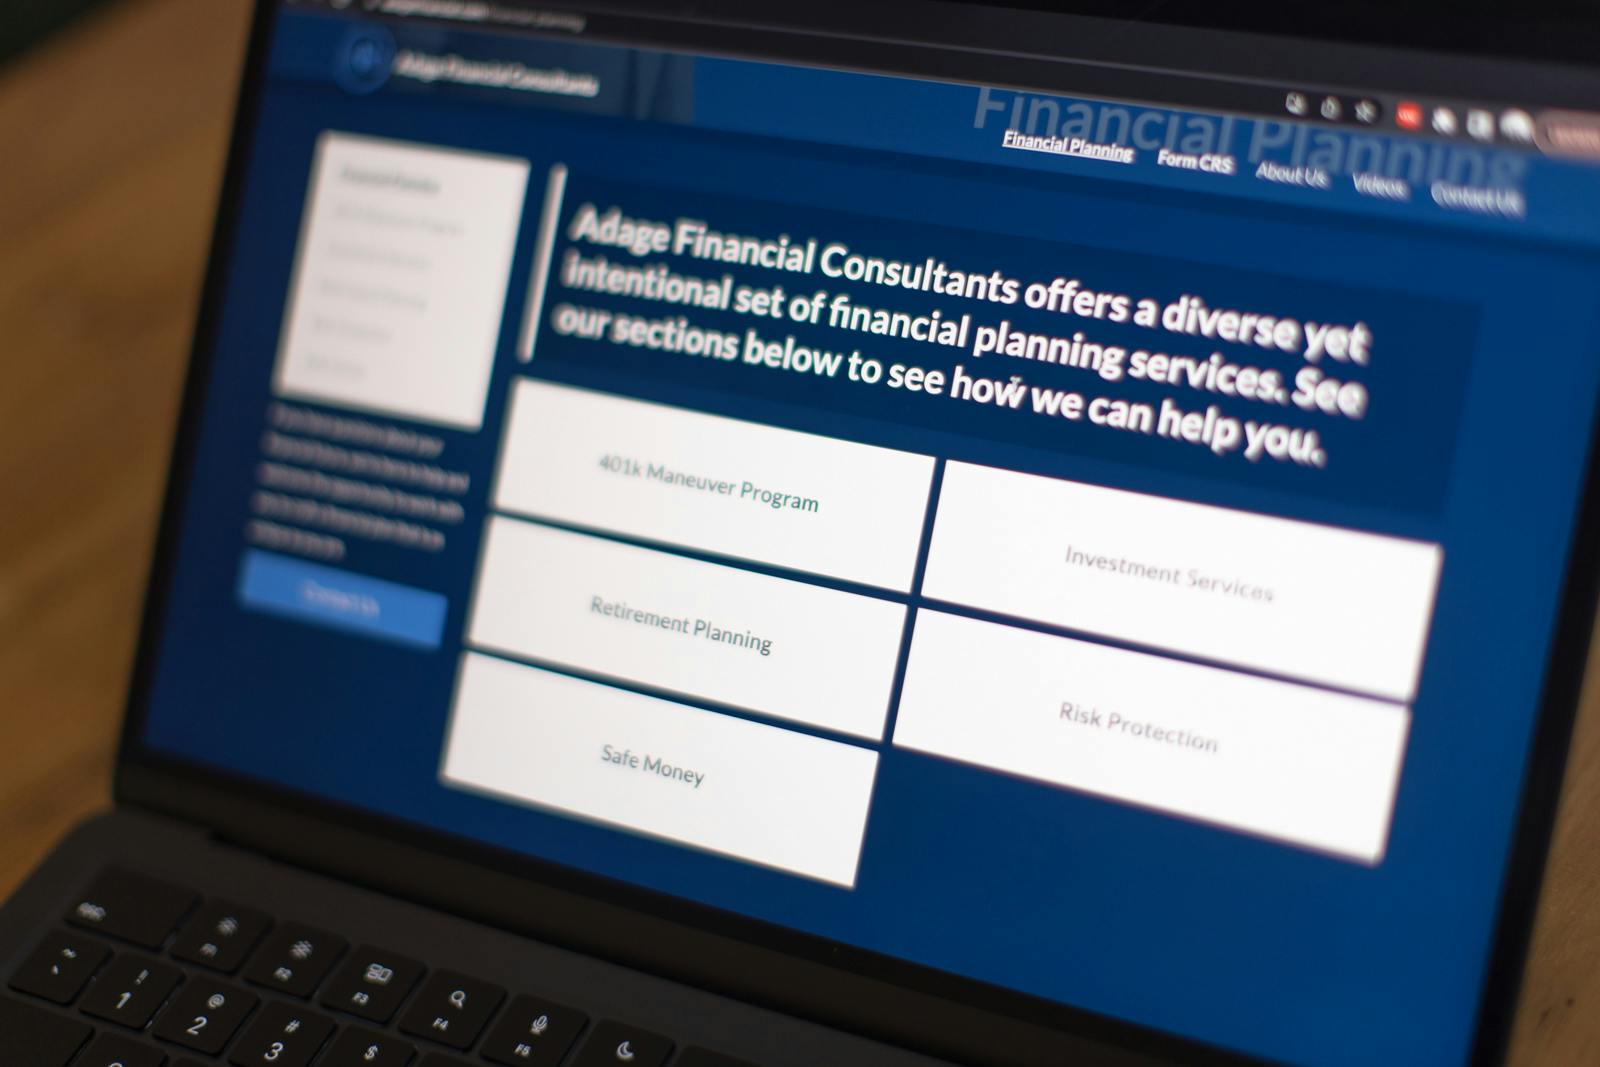 Adage Financial Consultants